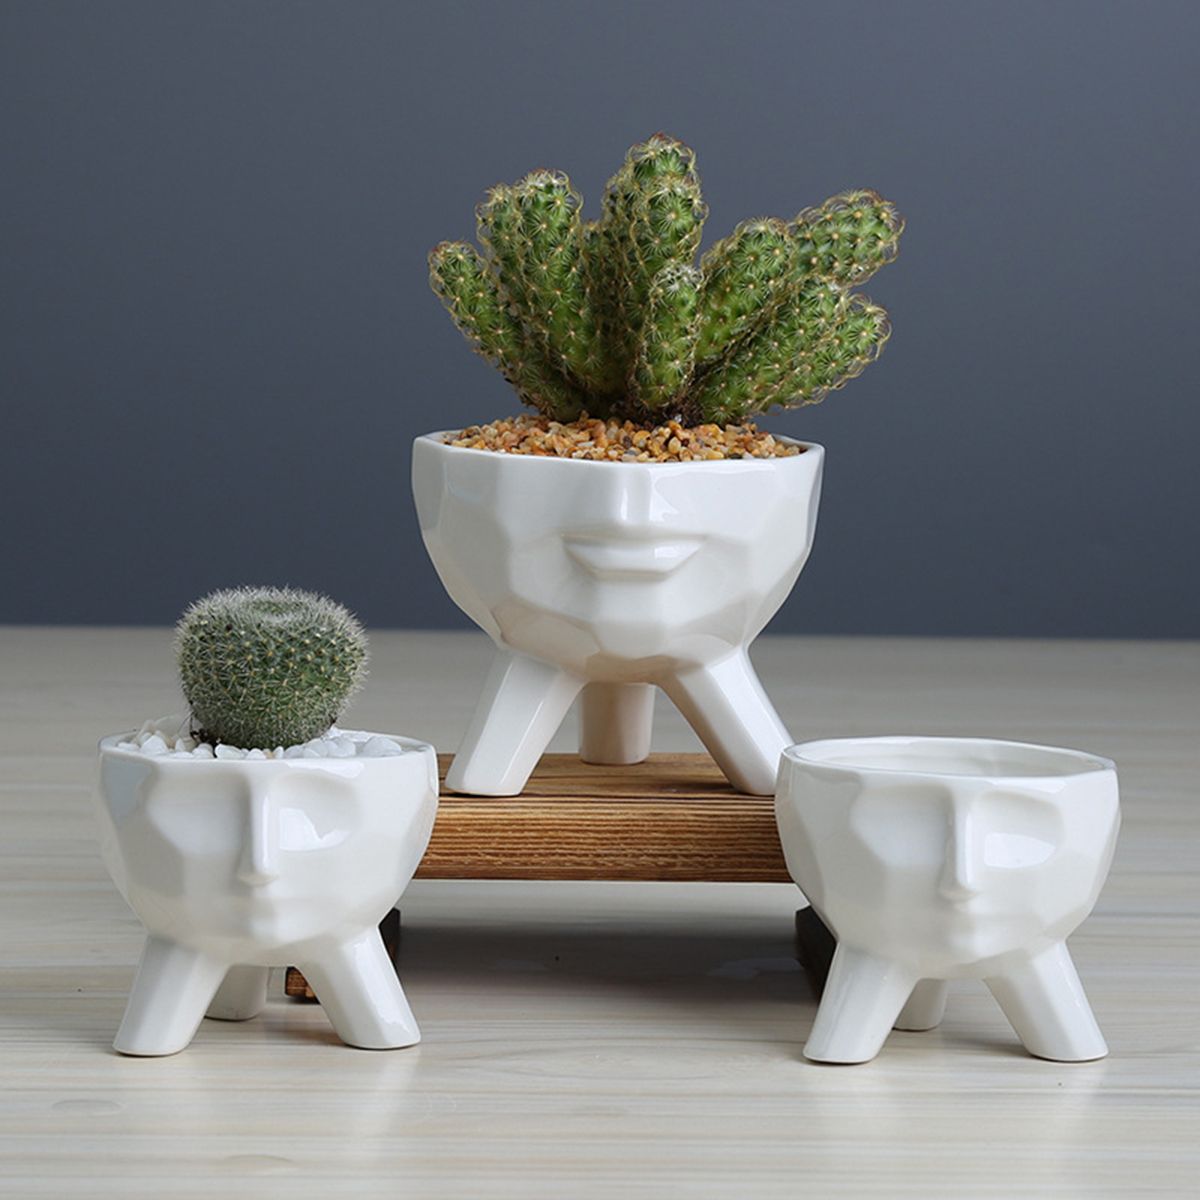 Creative-Humanoid-Ceramic-Flower-Pot-Green-Succulent-Planter-Plant-Container-1728448